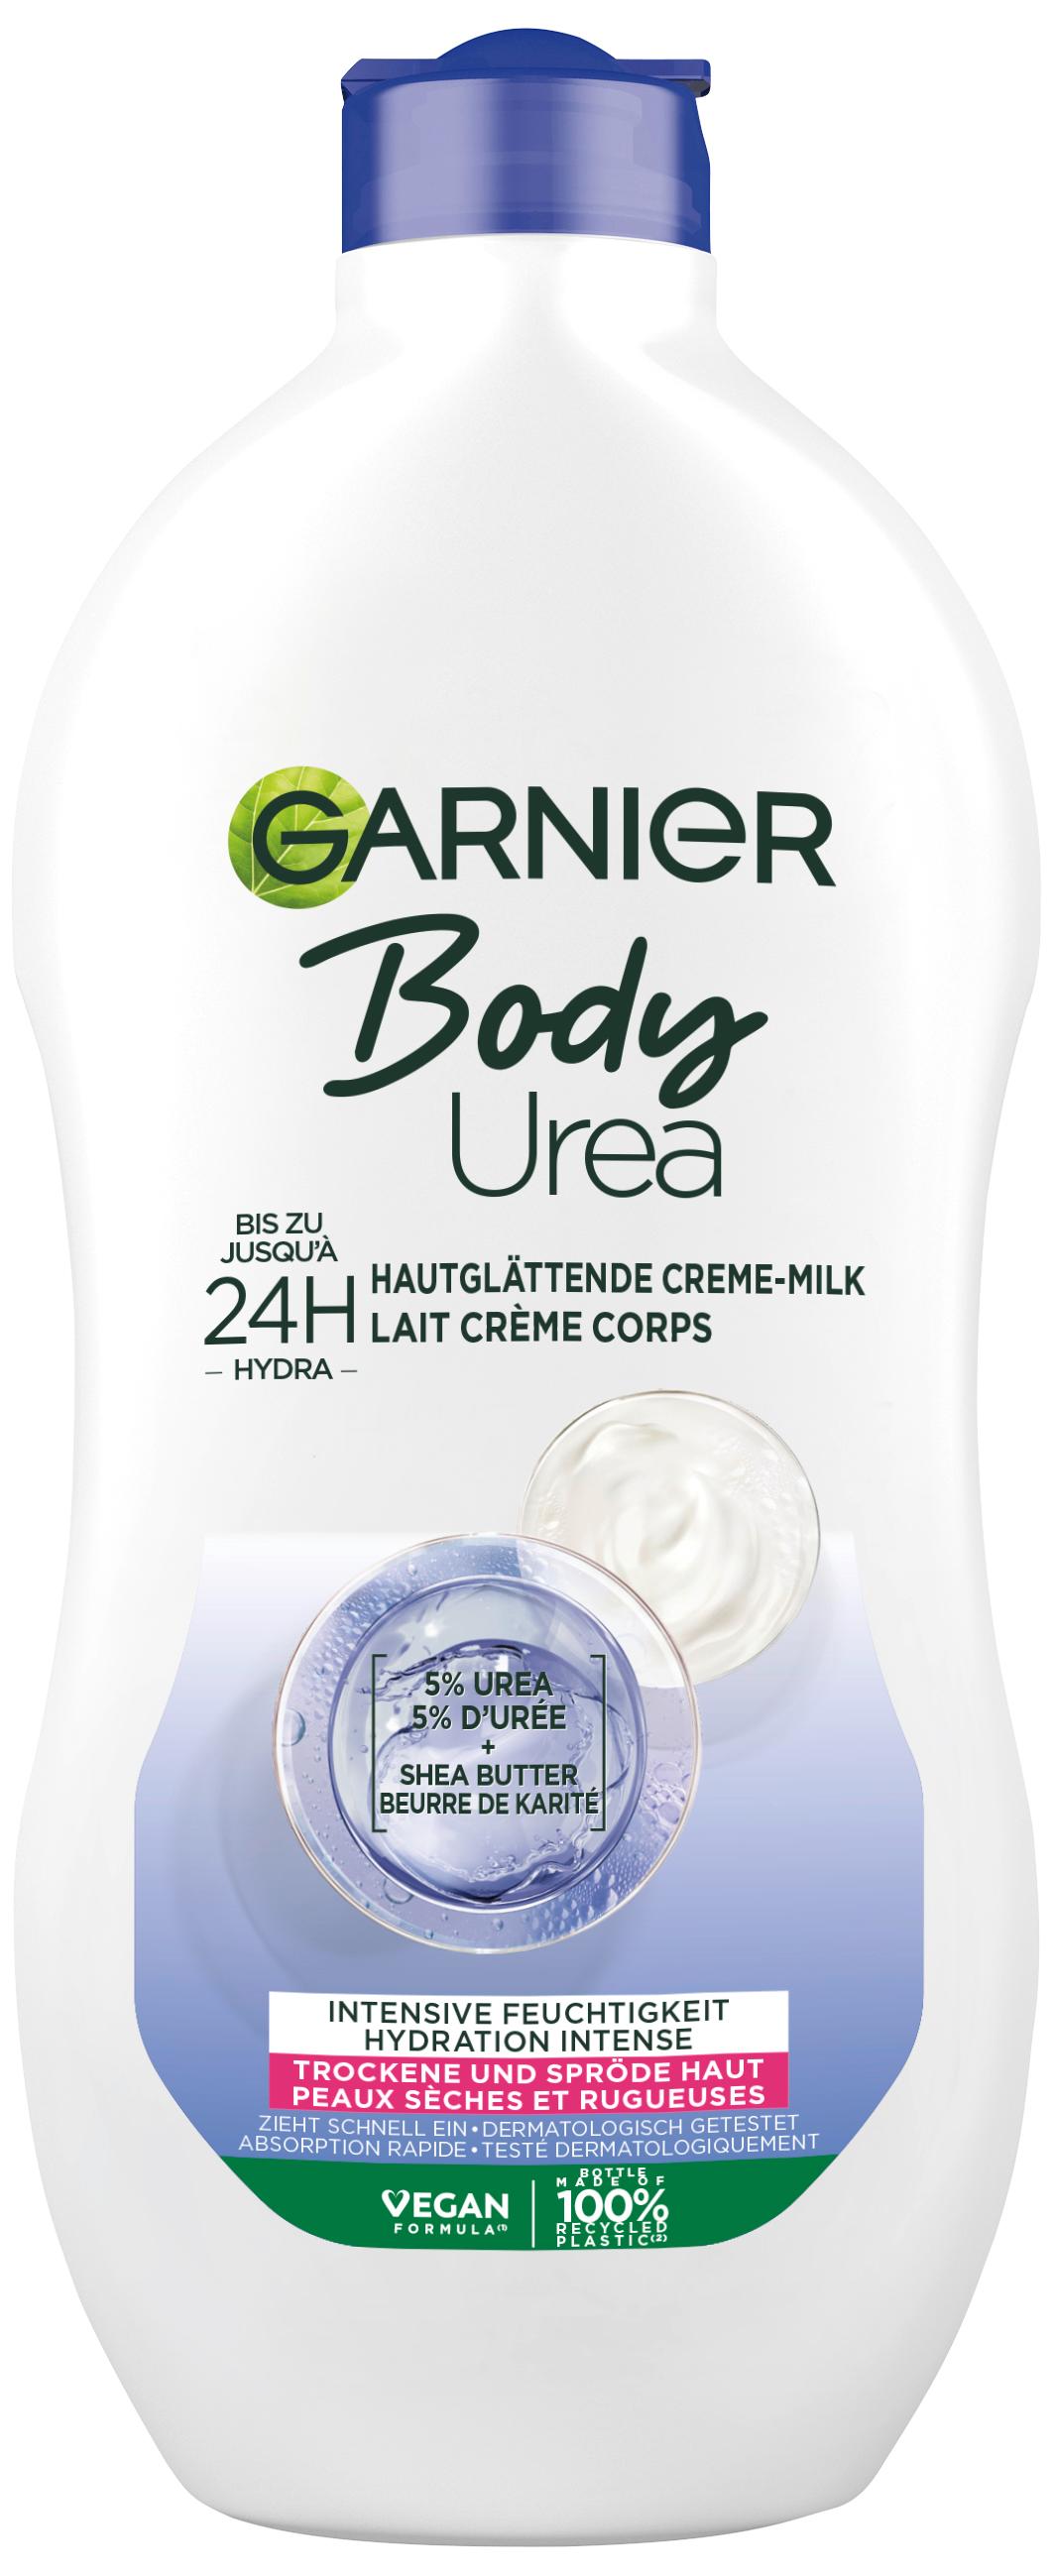 Skinactive Body - Urea 24H Hautglättende Creme-Milk